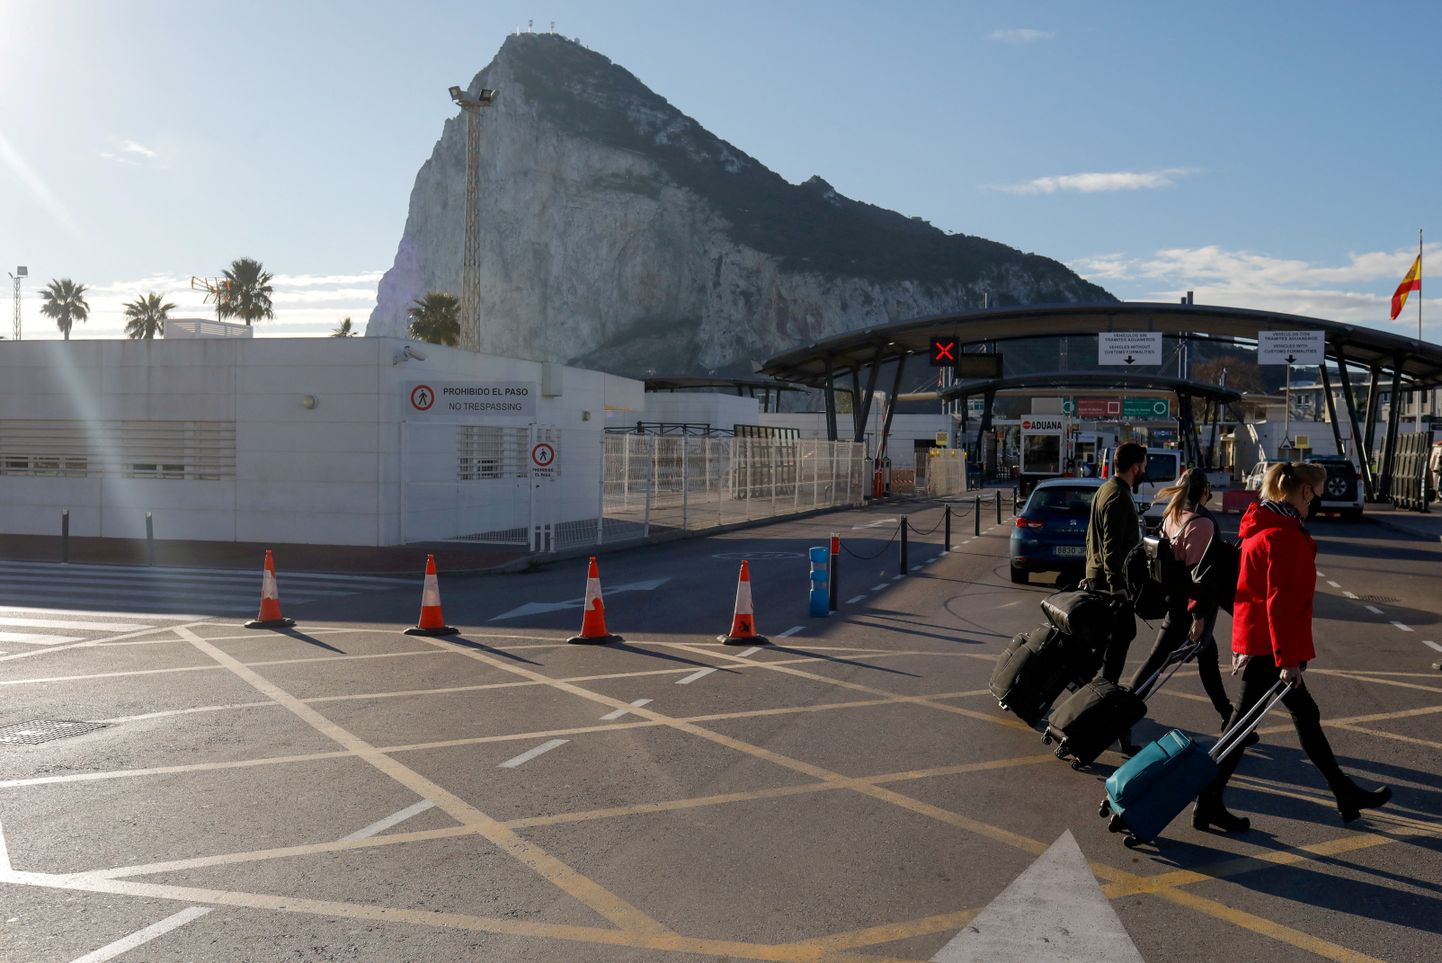 Gibraltari kalju. Pilt on illustreeriv.